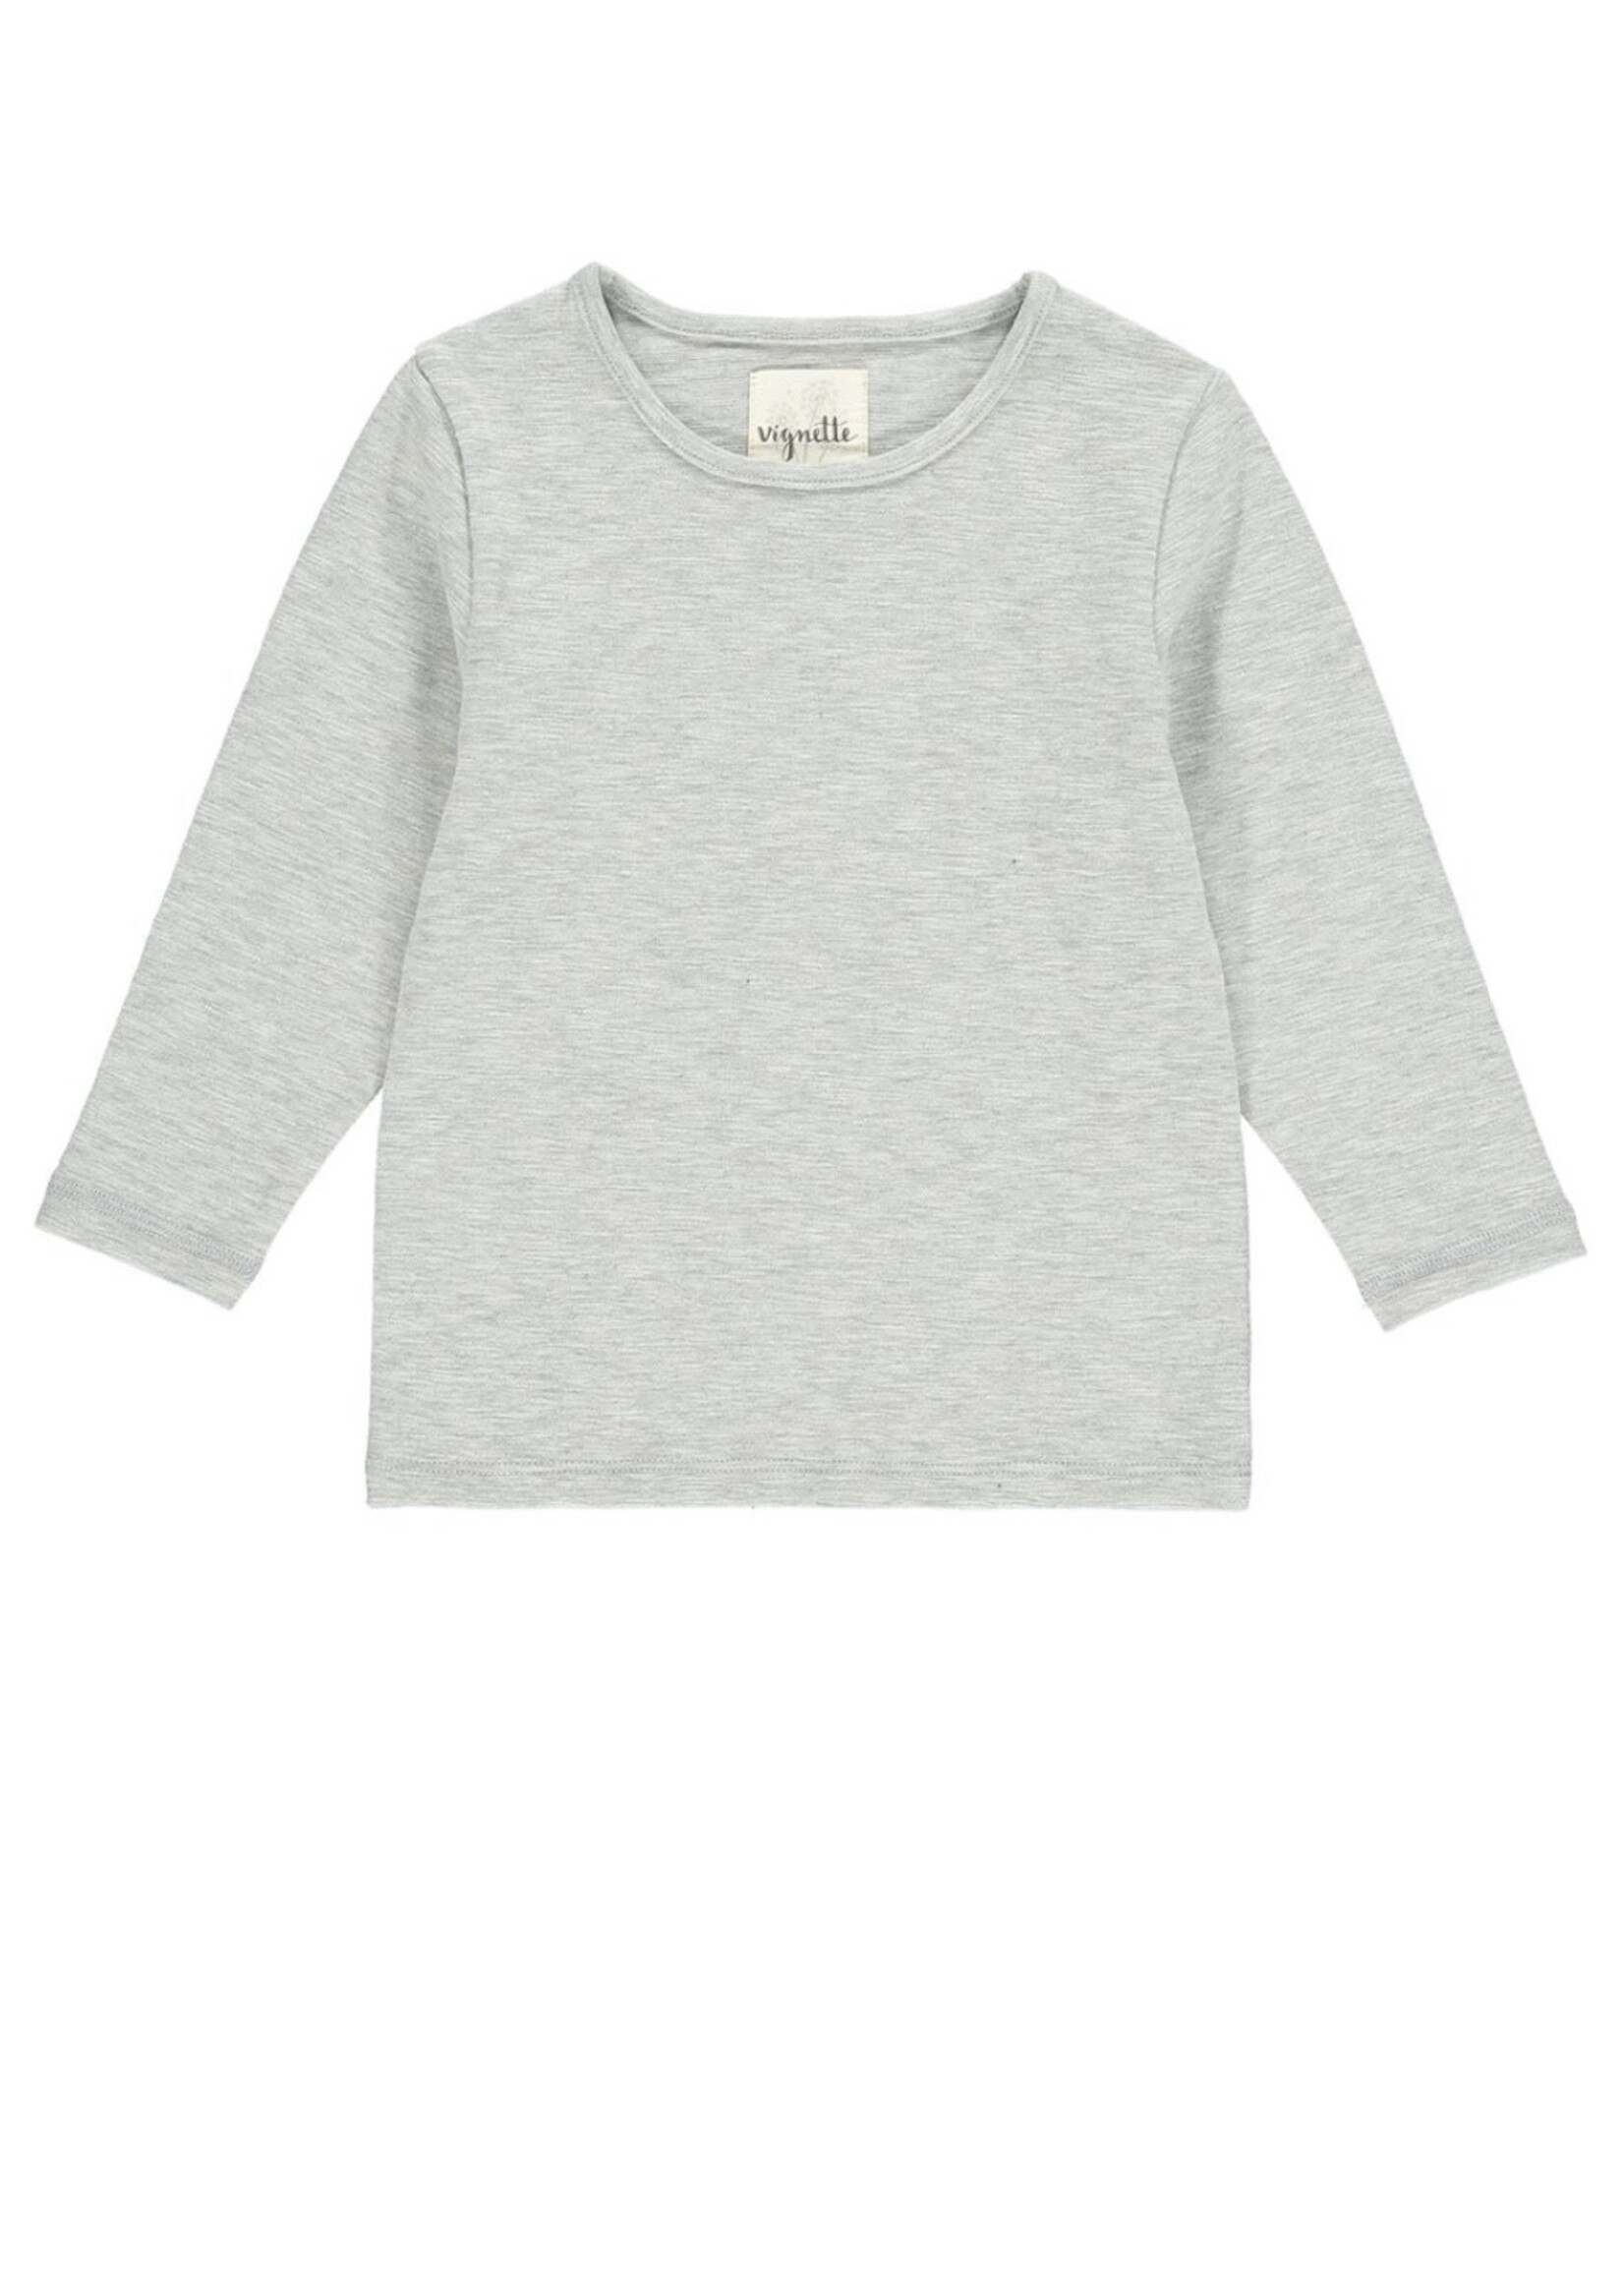 Vignette Vignette, Reese T-shirt in Grey